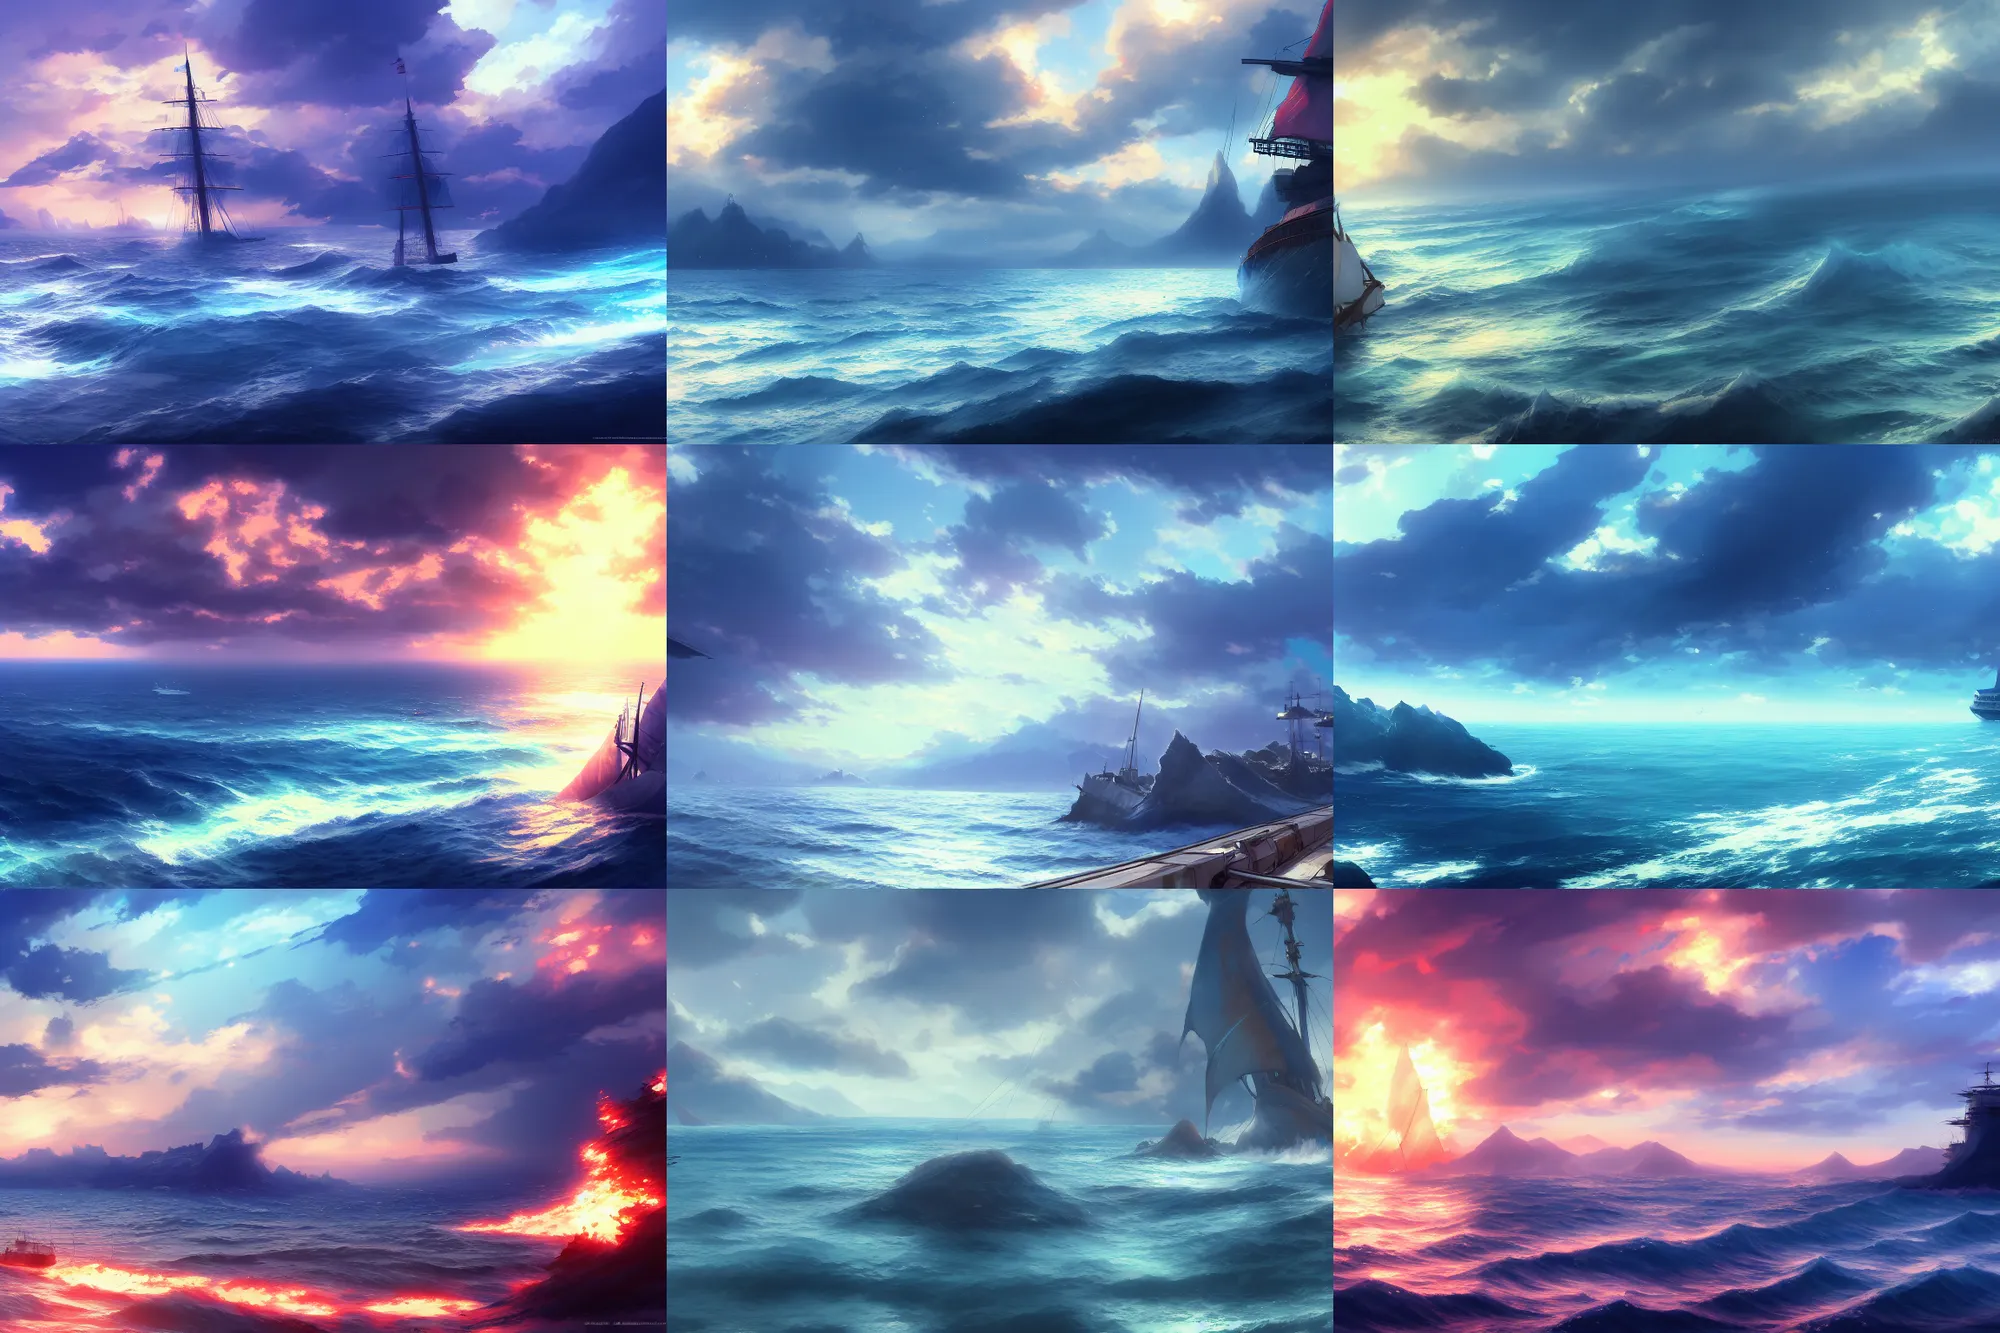 Prompt: Wallpaper anime blue water, sinking ship on fire, far away, landscape, gorgeous scenery, Cushart Krenz, Shinkai Makoto, by Lluluchwan, lots of details, highly detailed, 4k